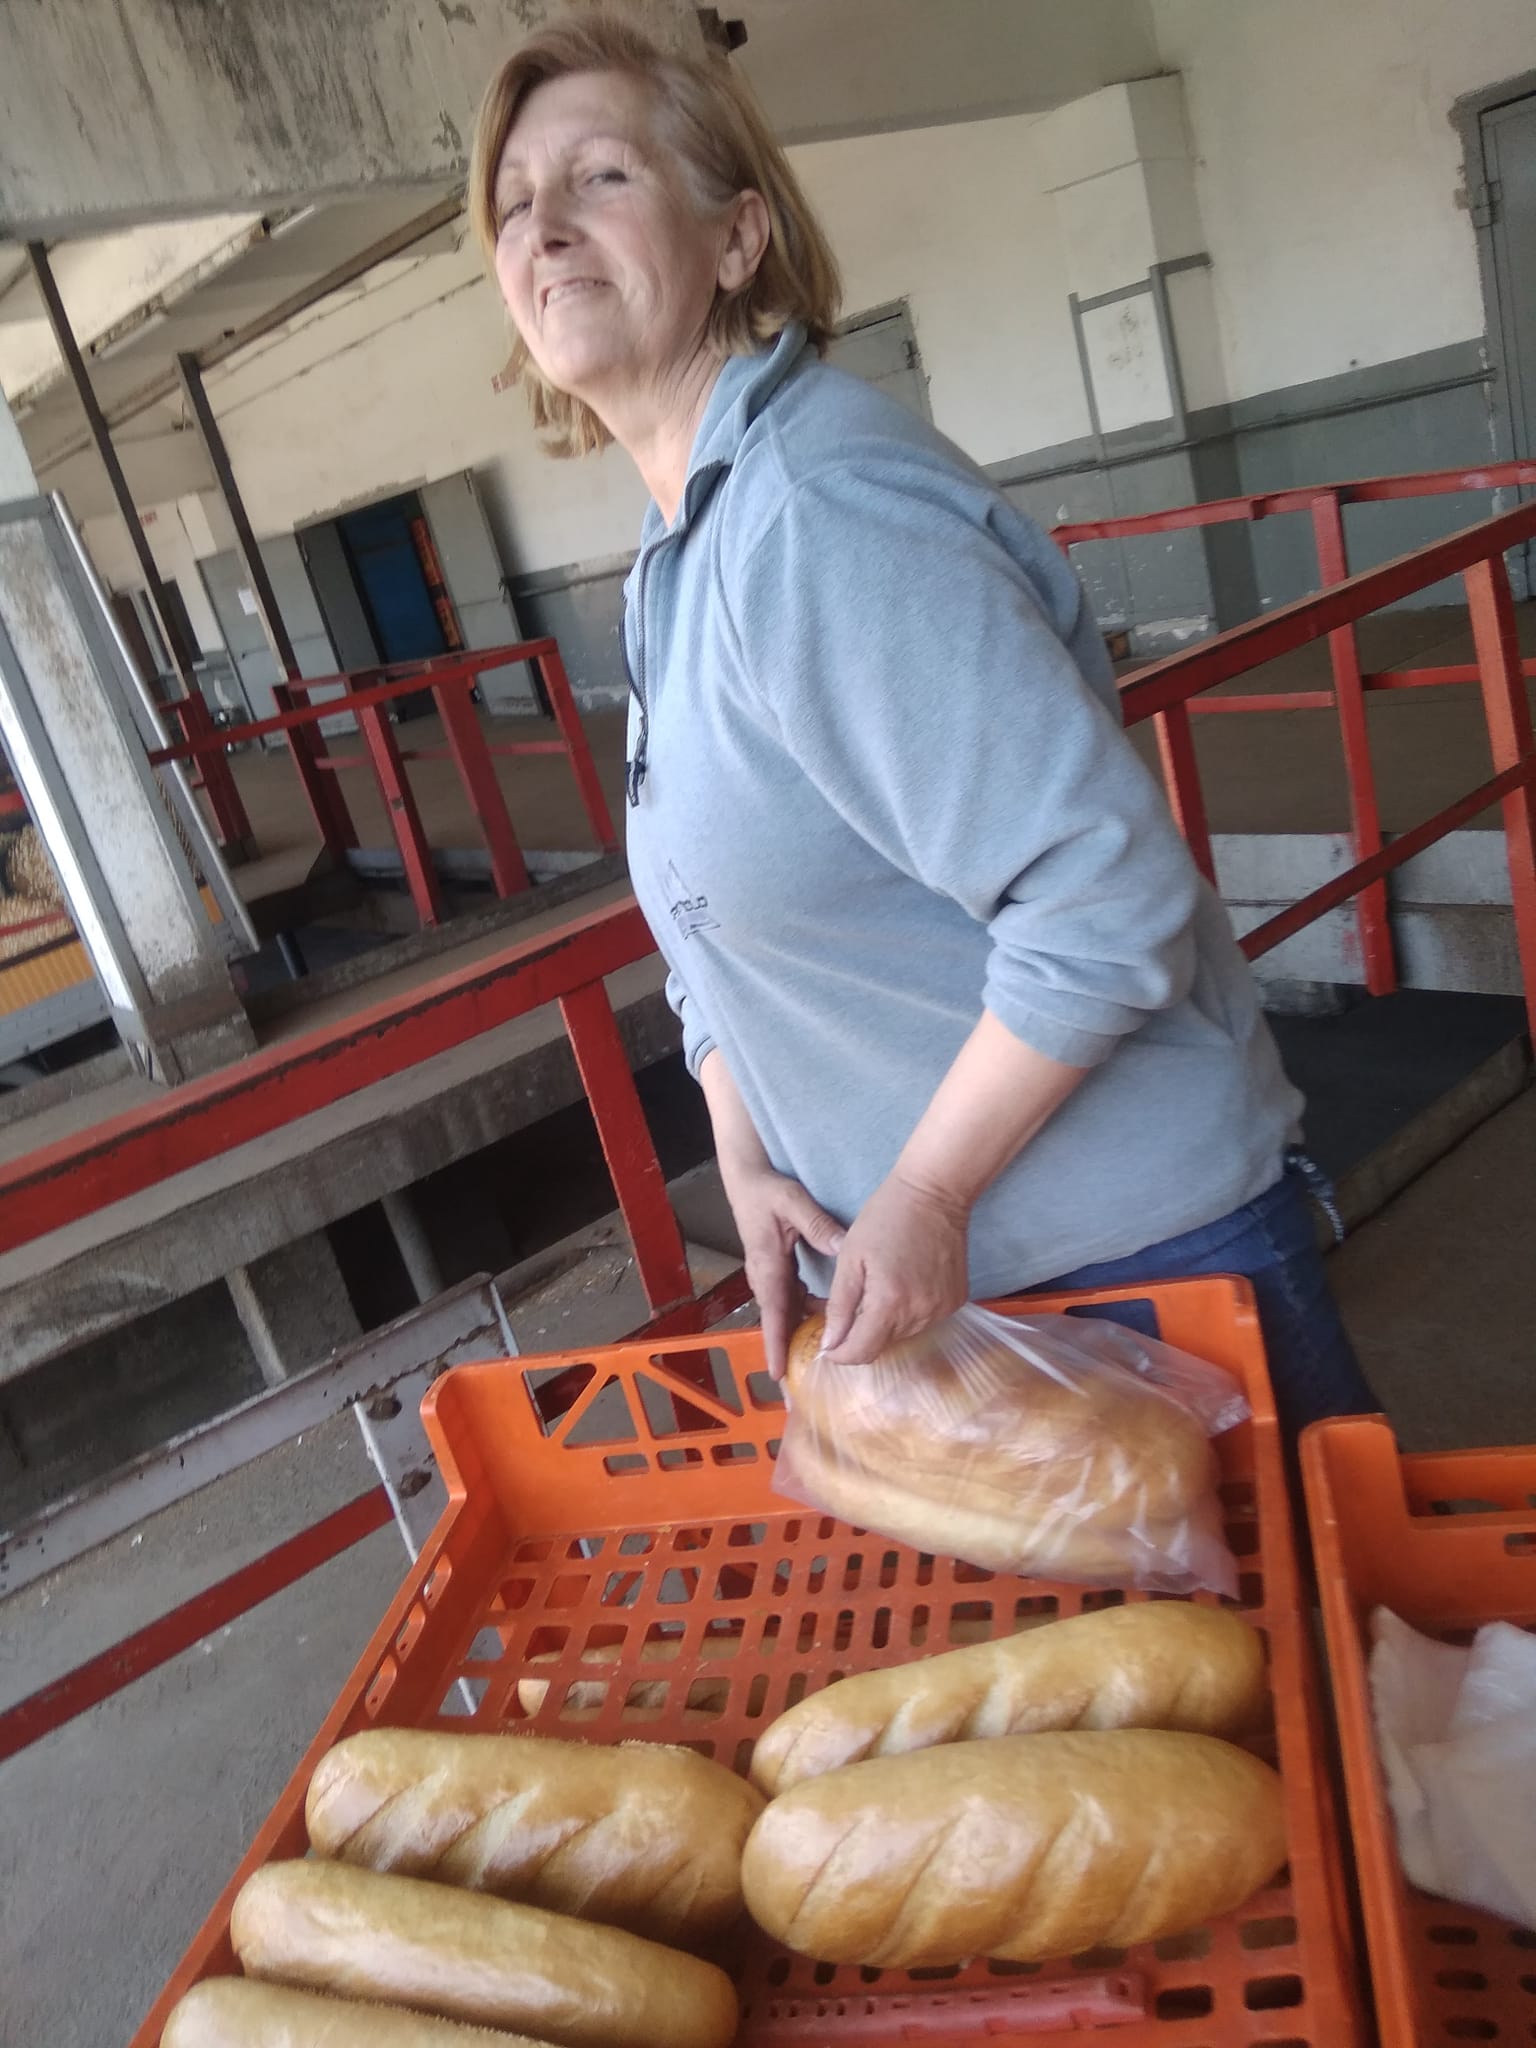 We bring bread again